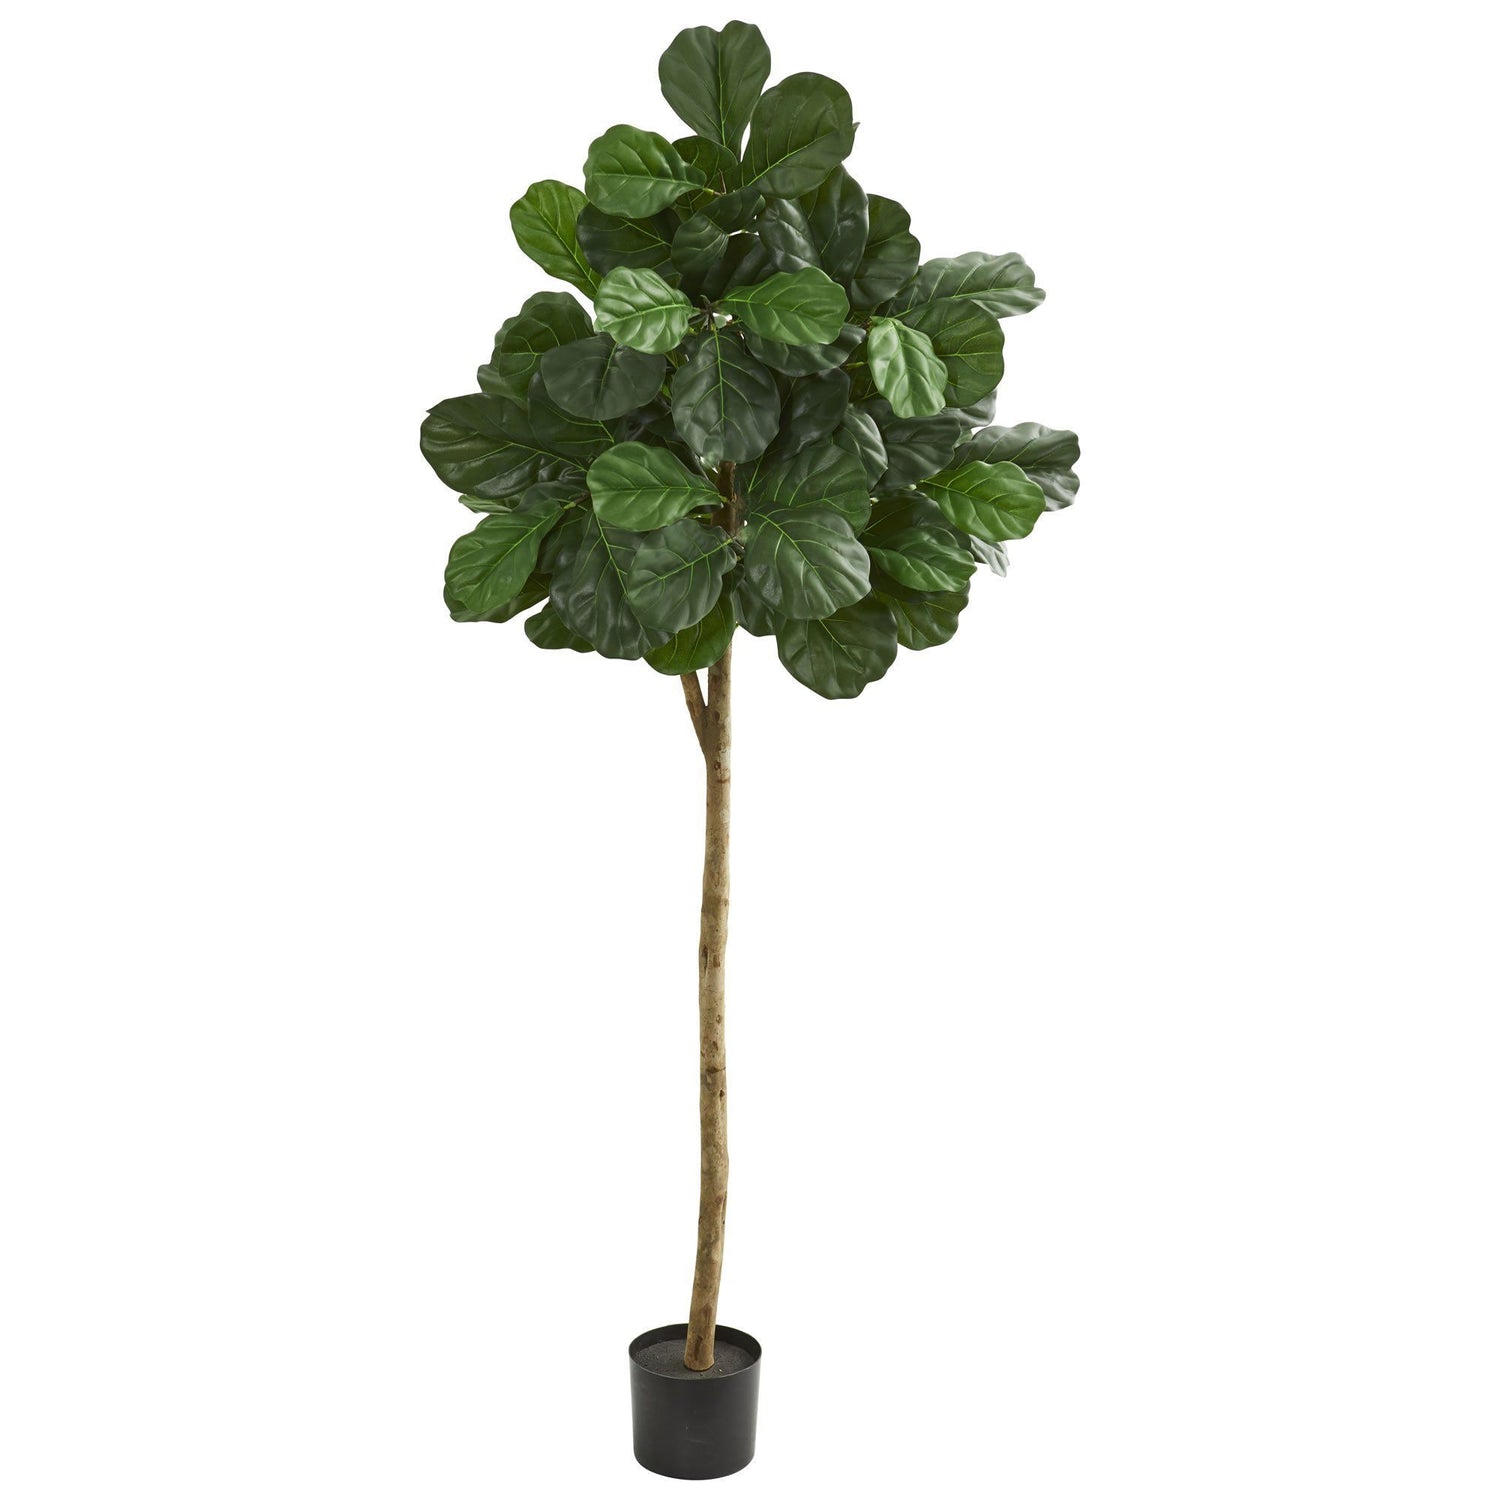 6’ Tall Fiddle Leaf Fig Artificial Tree